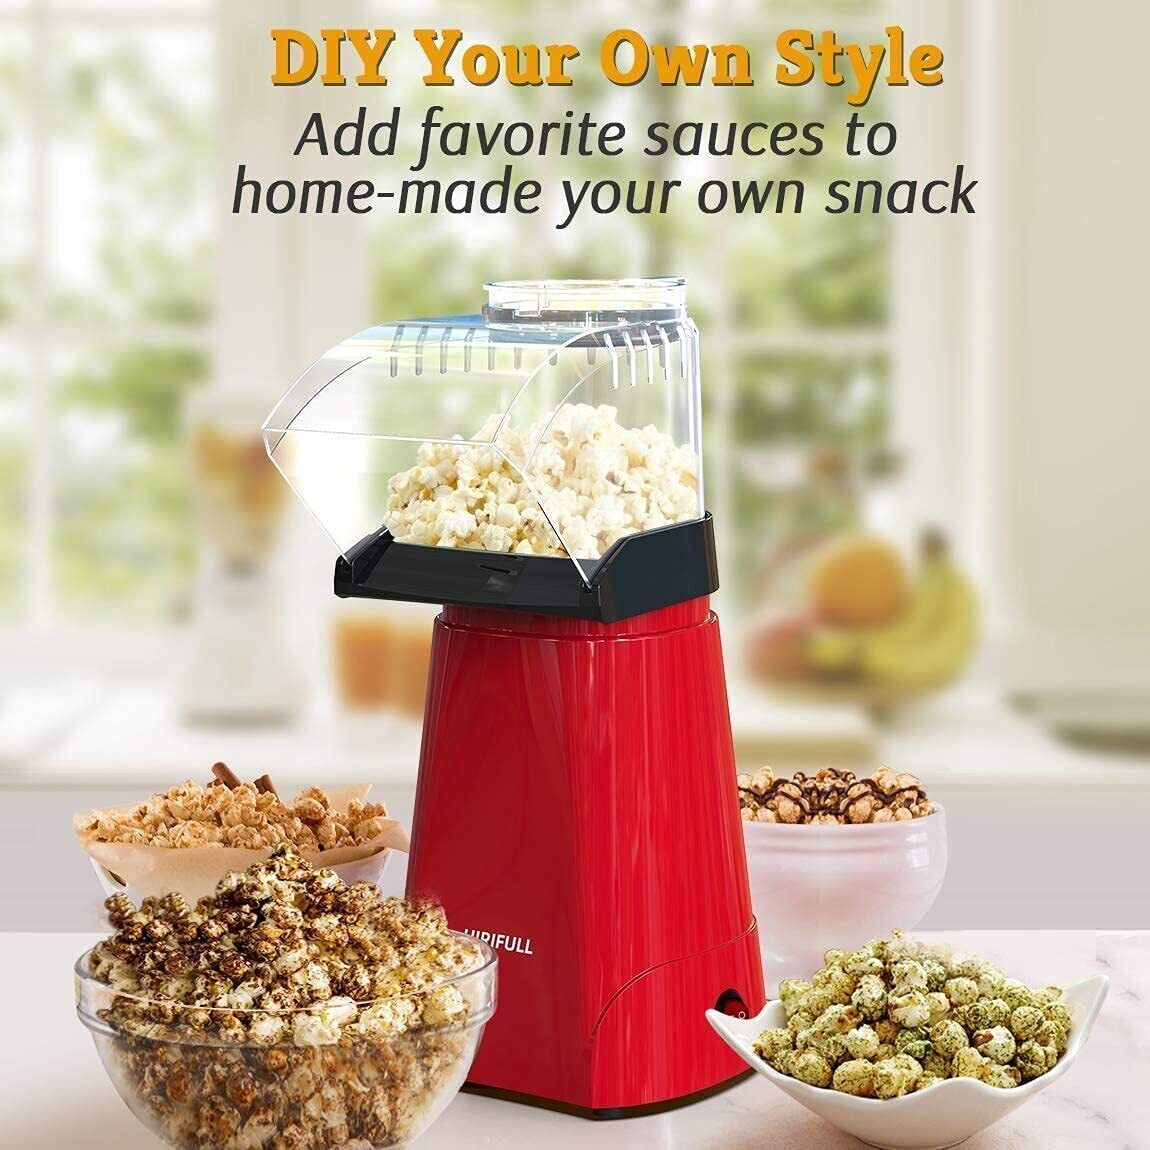 Decakila Hot Air Popcorn Popper, Pop Popcorn Maker, oil-free, low-fat